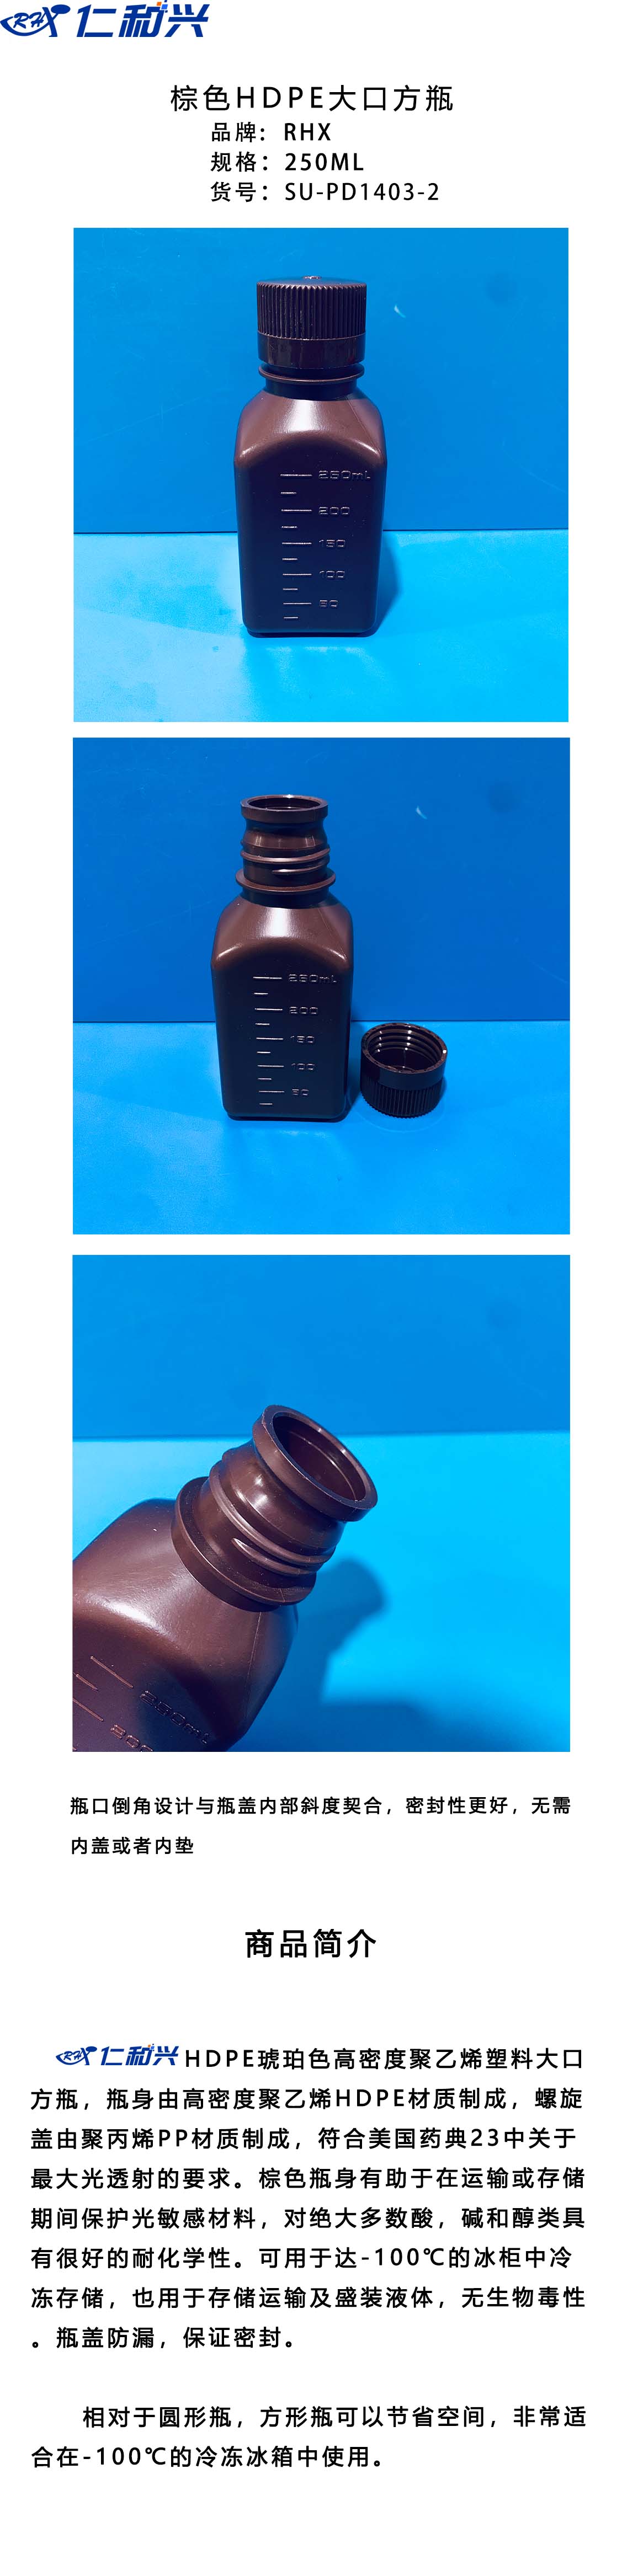 SU-PD1403-2 棕色HDPE大口方瓶长图模板.jpg